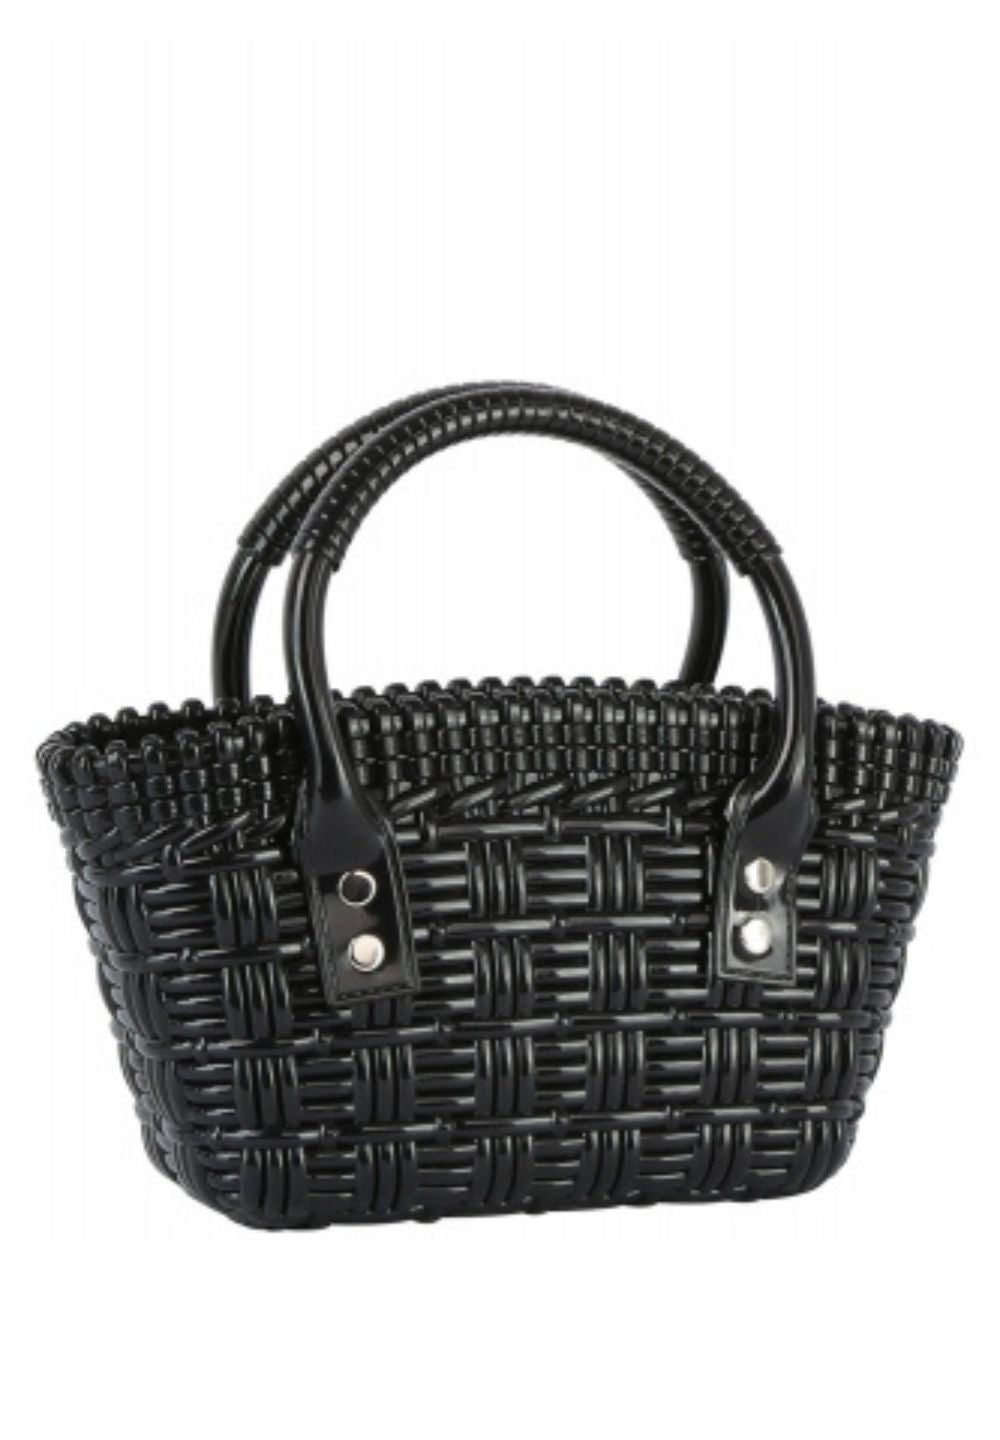 Black Woven Pattern Jelly Tote Handbag